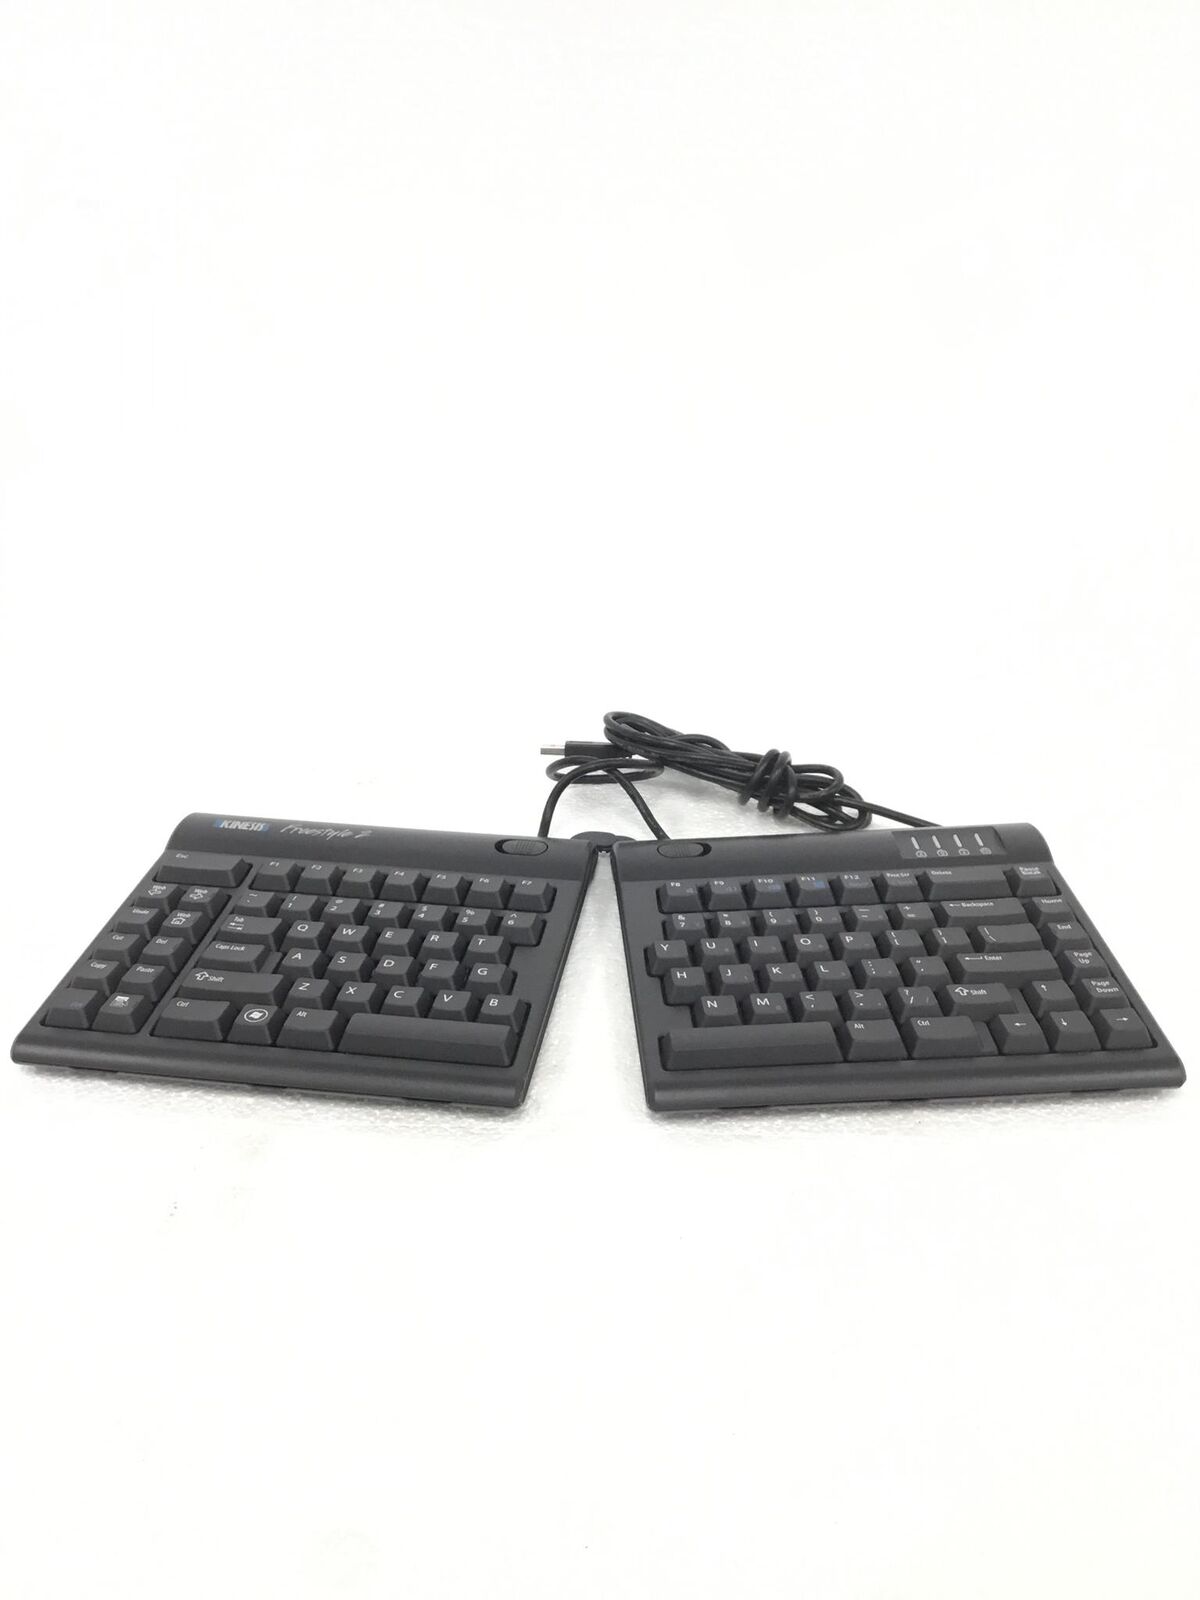 NEW Kinesis KB800 Freestyle 2 Ergonomic Keyboard USB Keyboard KB800PBUS,OPEN BOX